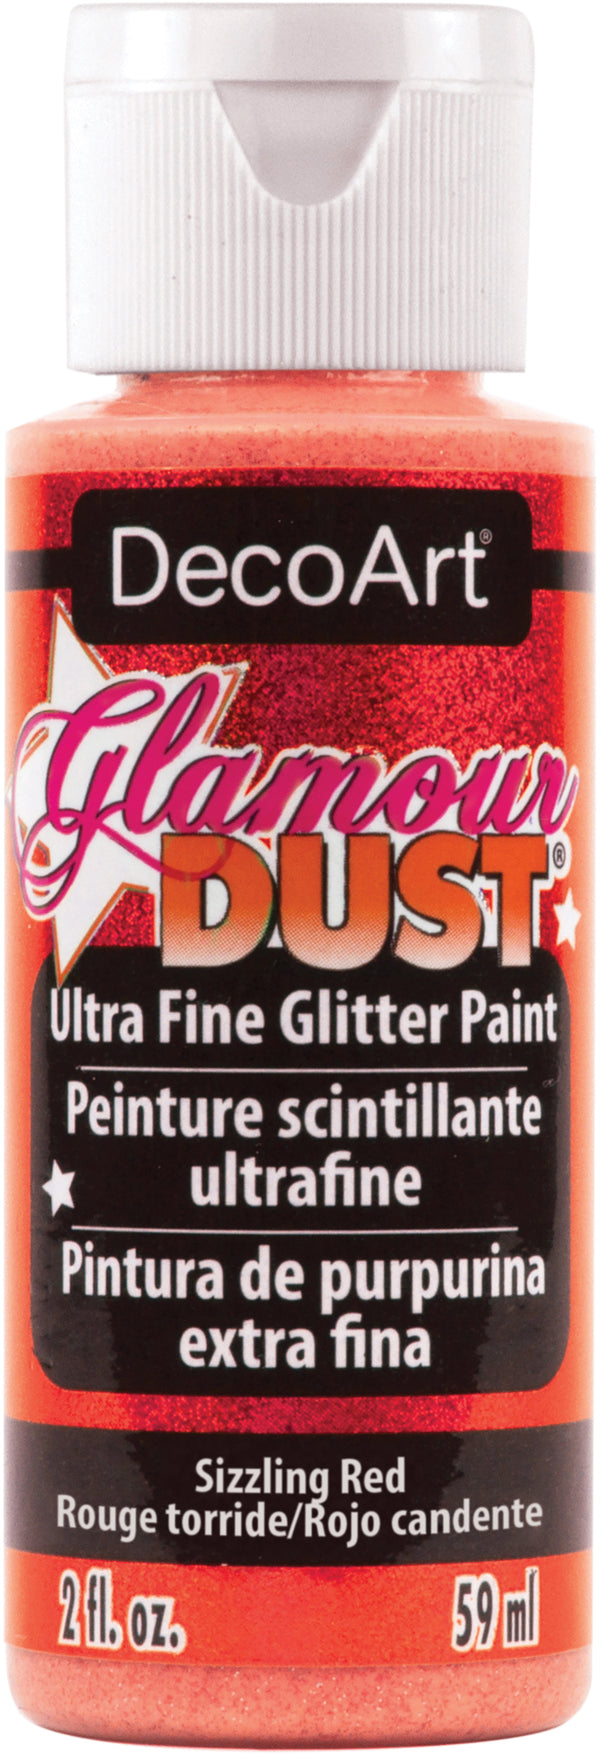 DecoArt Glamour Dust Glitter Paint 2oz - Sizzling Red